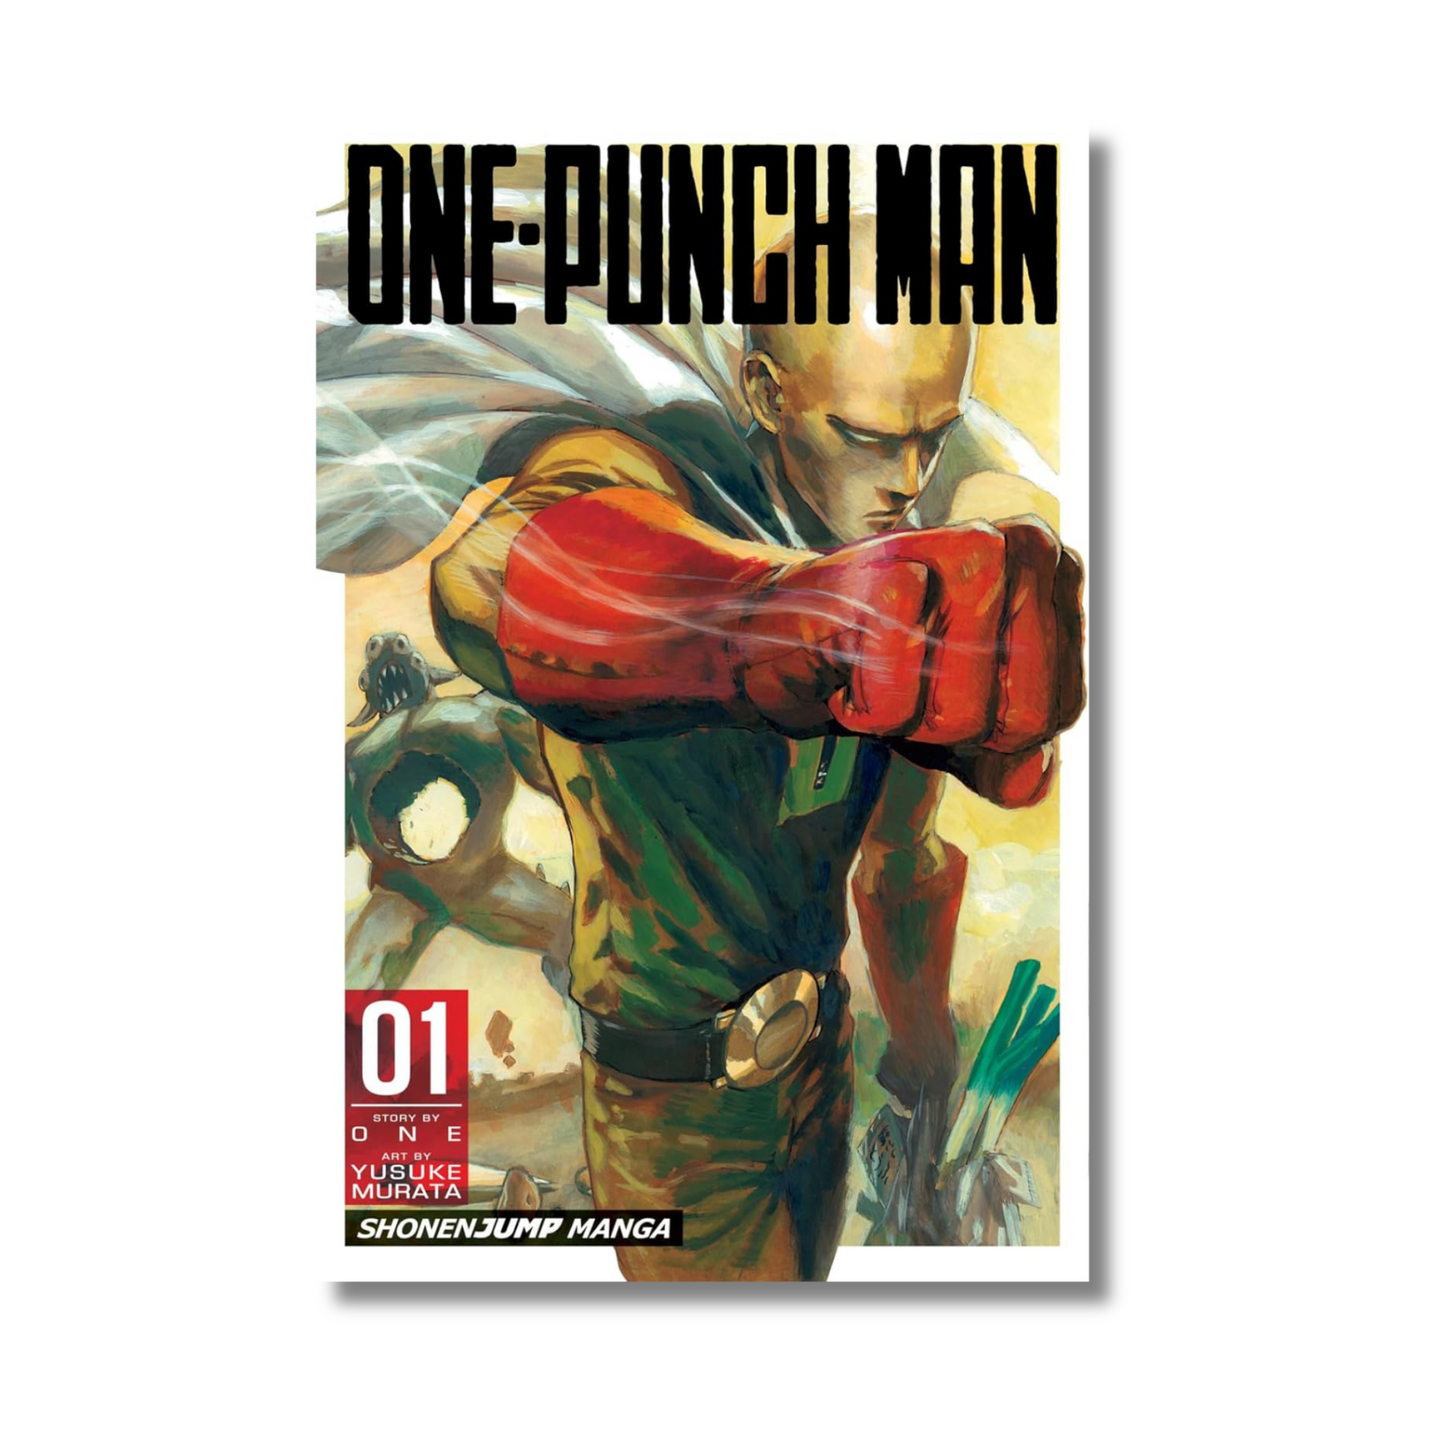 One Punch Man Manga Vol 1 By One & Yusuke Murata (Paperback)